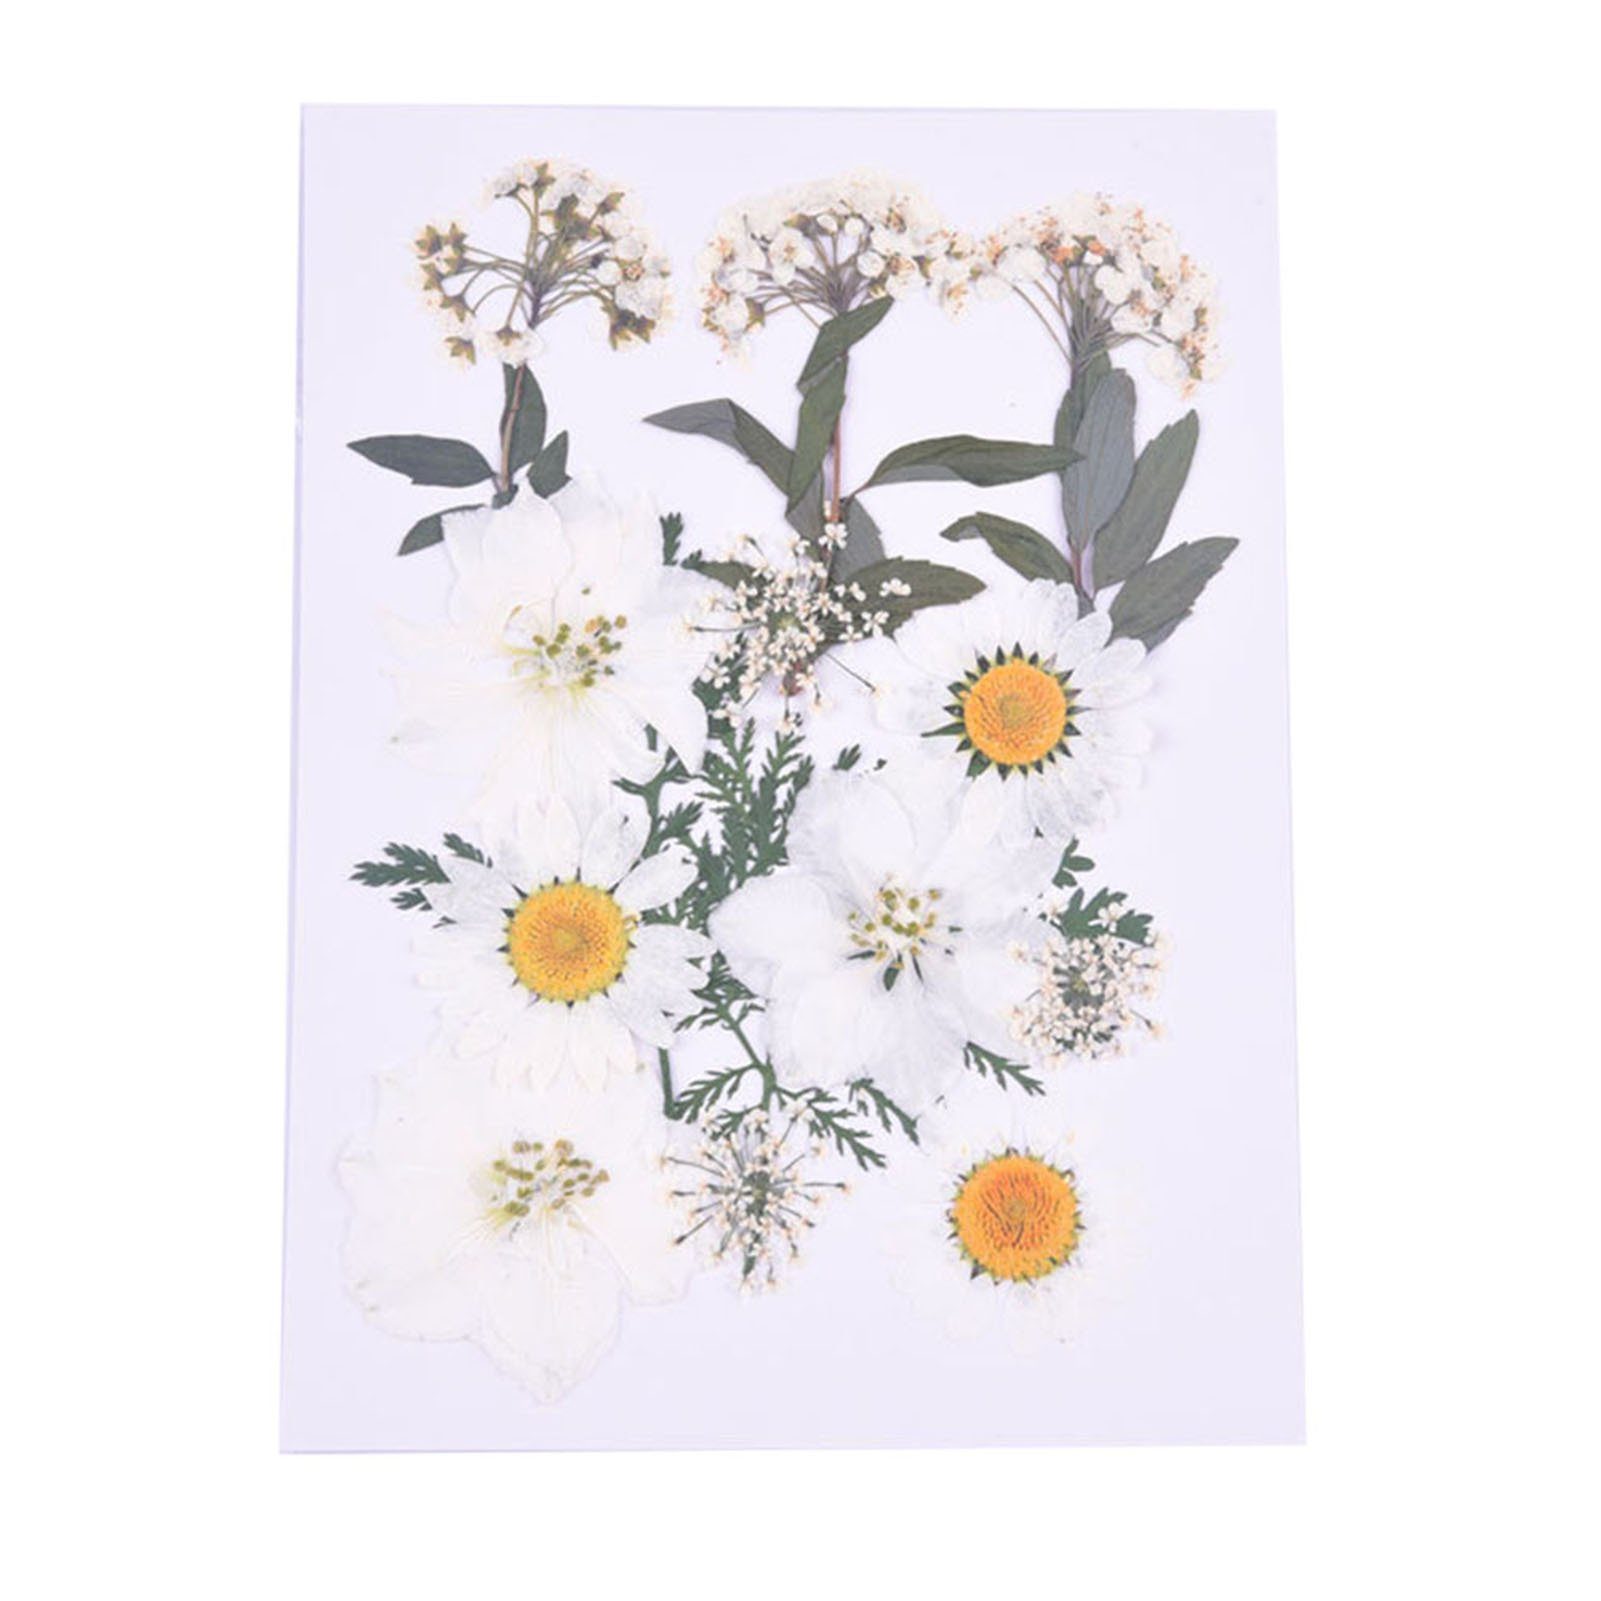 Kleine Blumen, combination Trockene, Trockenblume Blusmart Scrapbooking, Blumen, 6 Getrocknete Gepresste